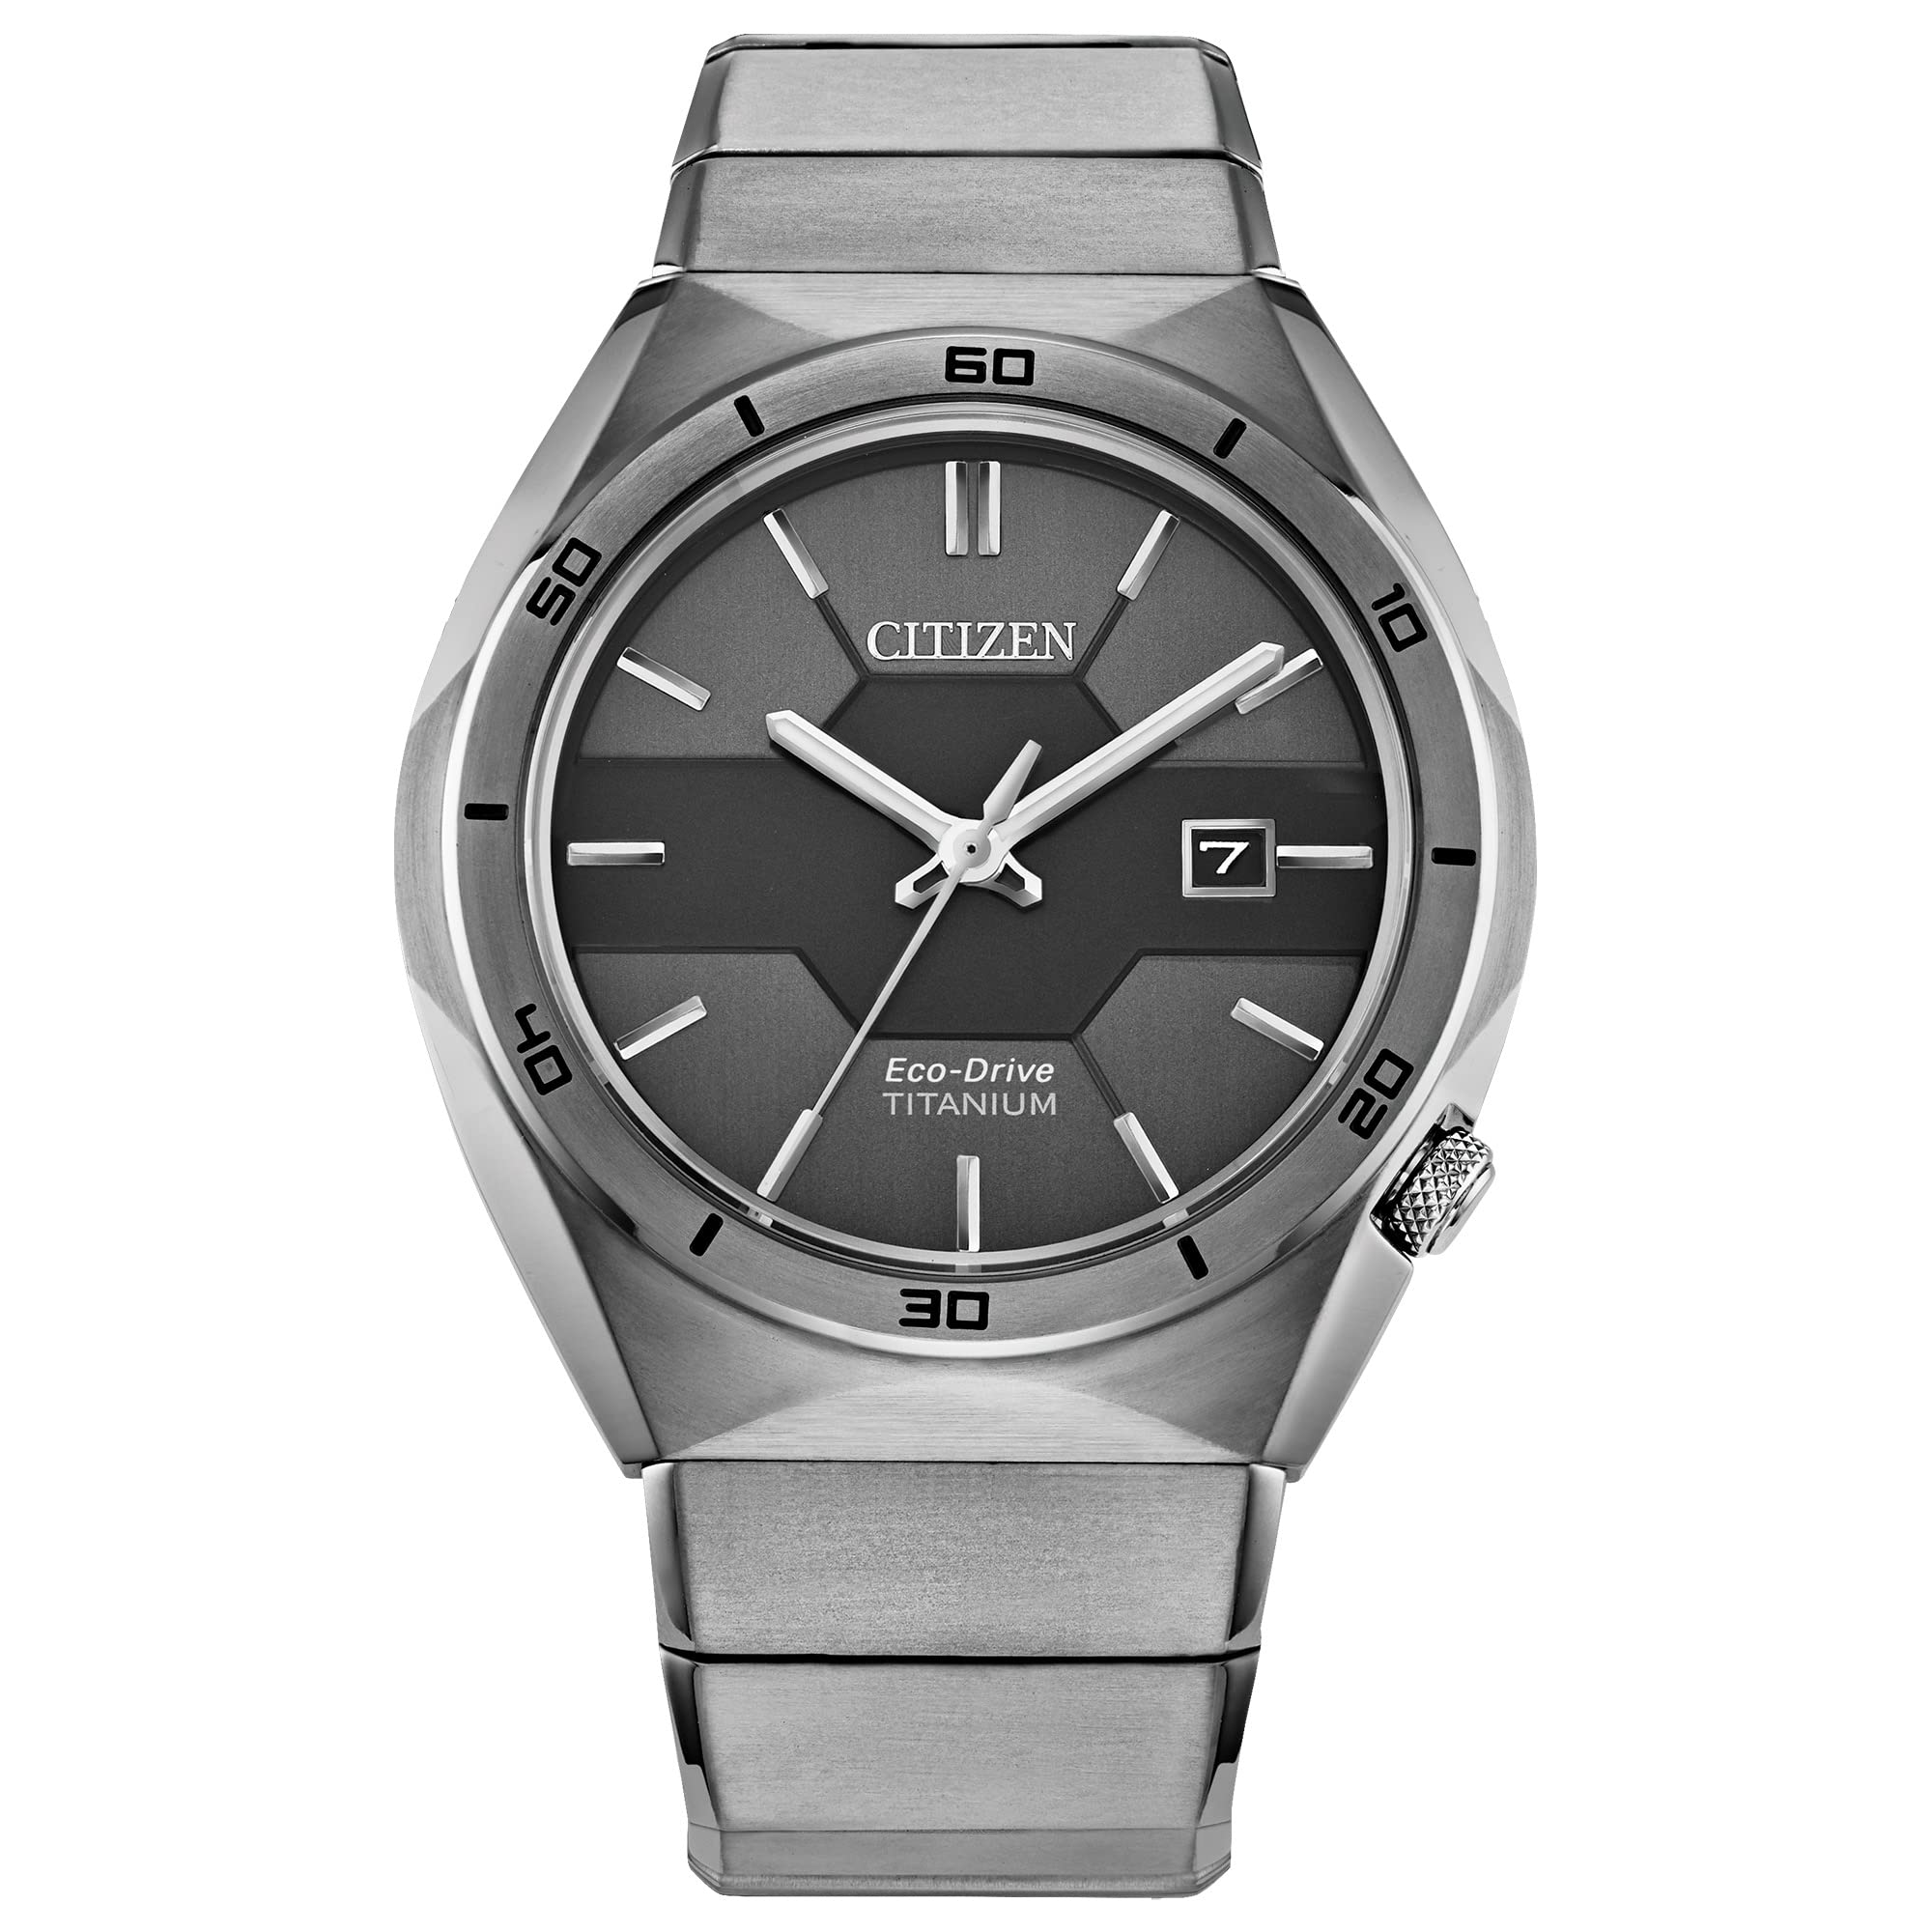 Citizen Men's Eco-Drive Sport Luxury Armor Watch in Super Titanium, Black Dial (Model: AW1660-51H)